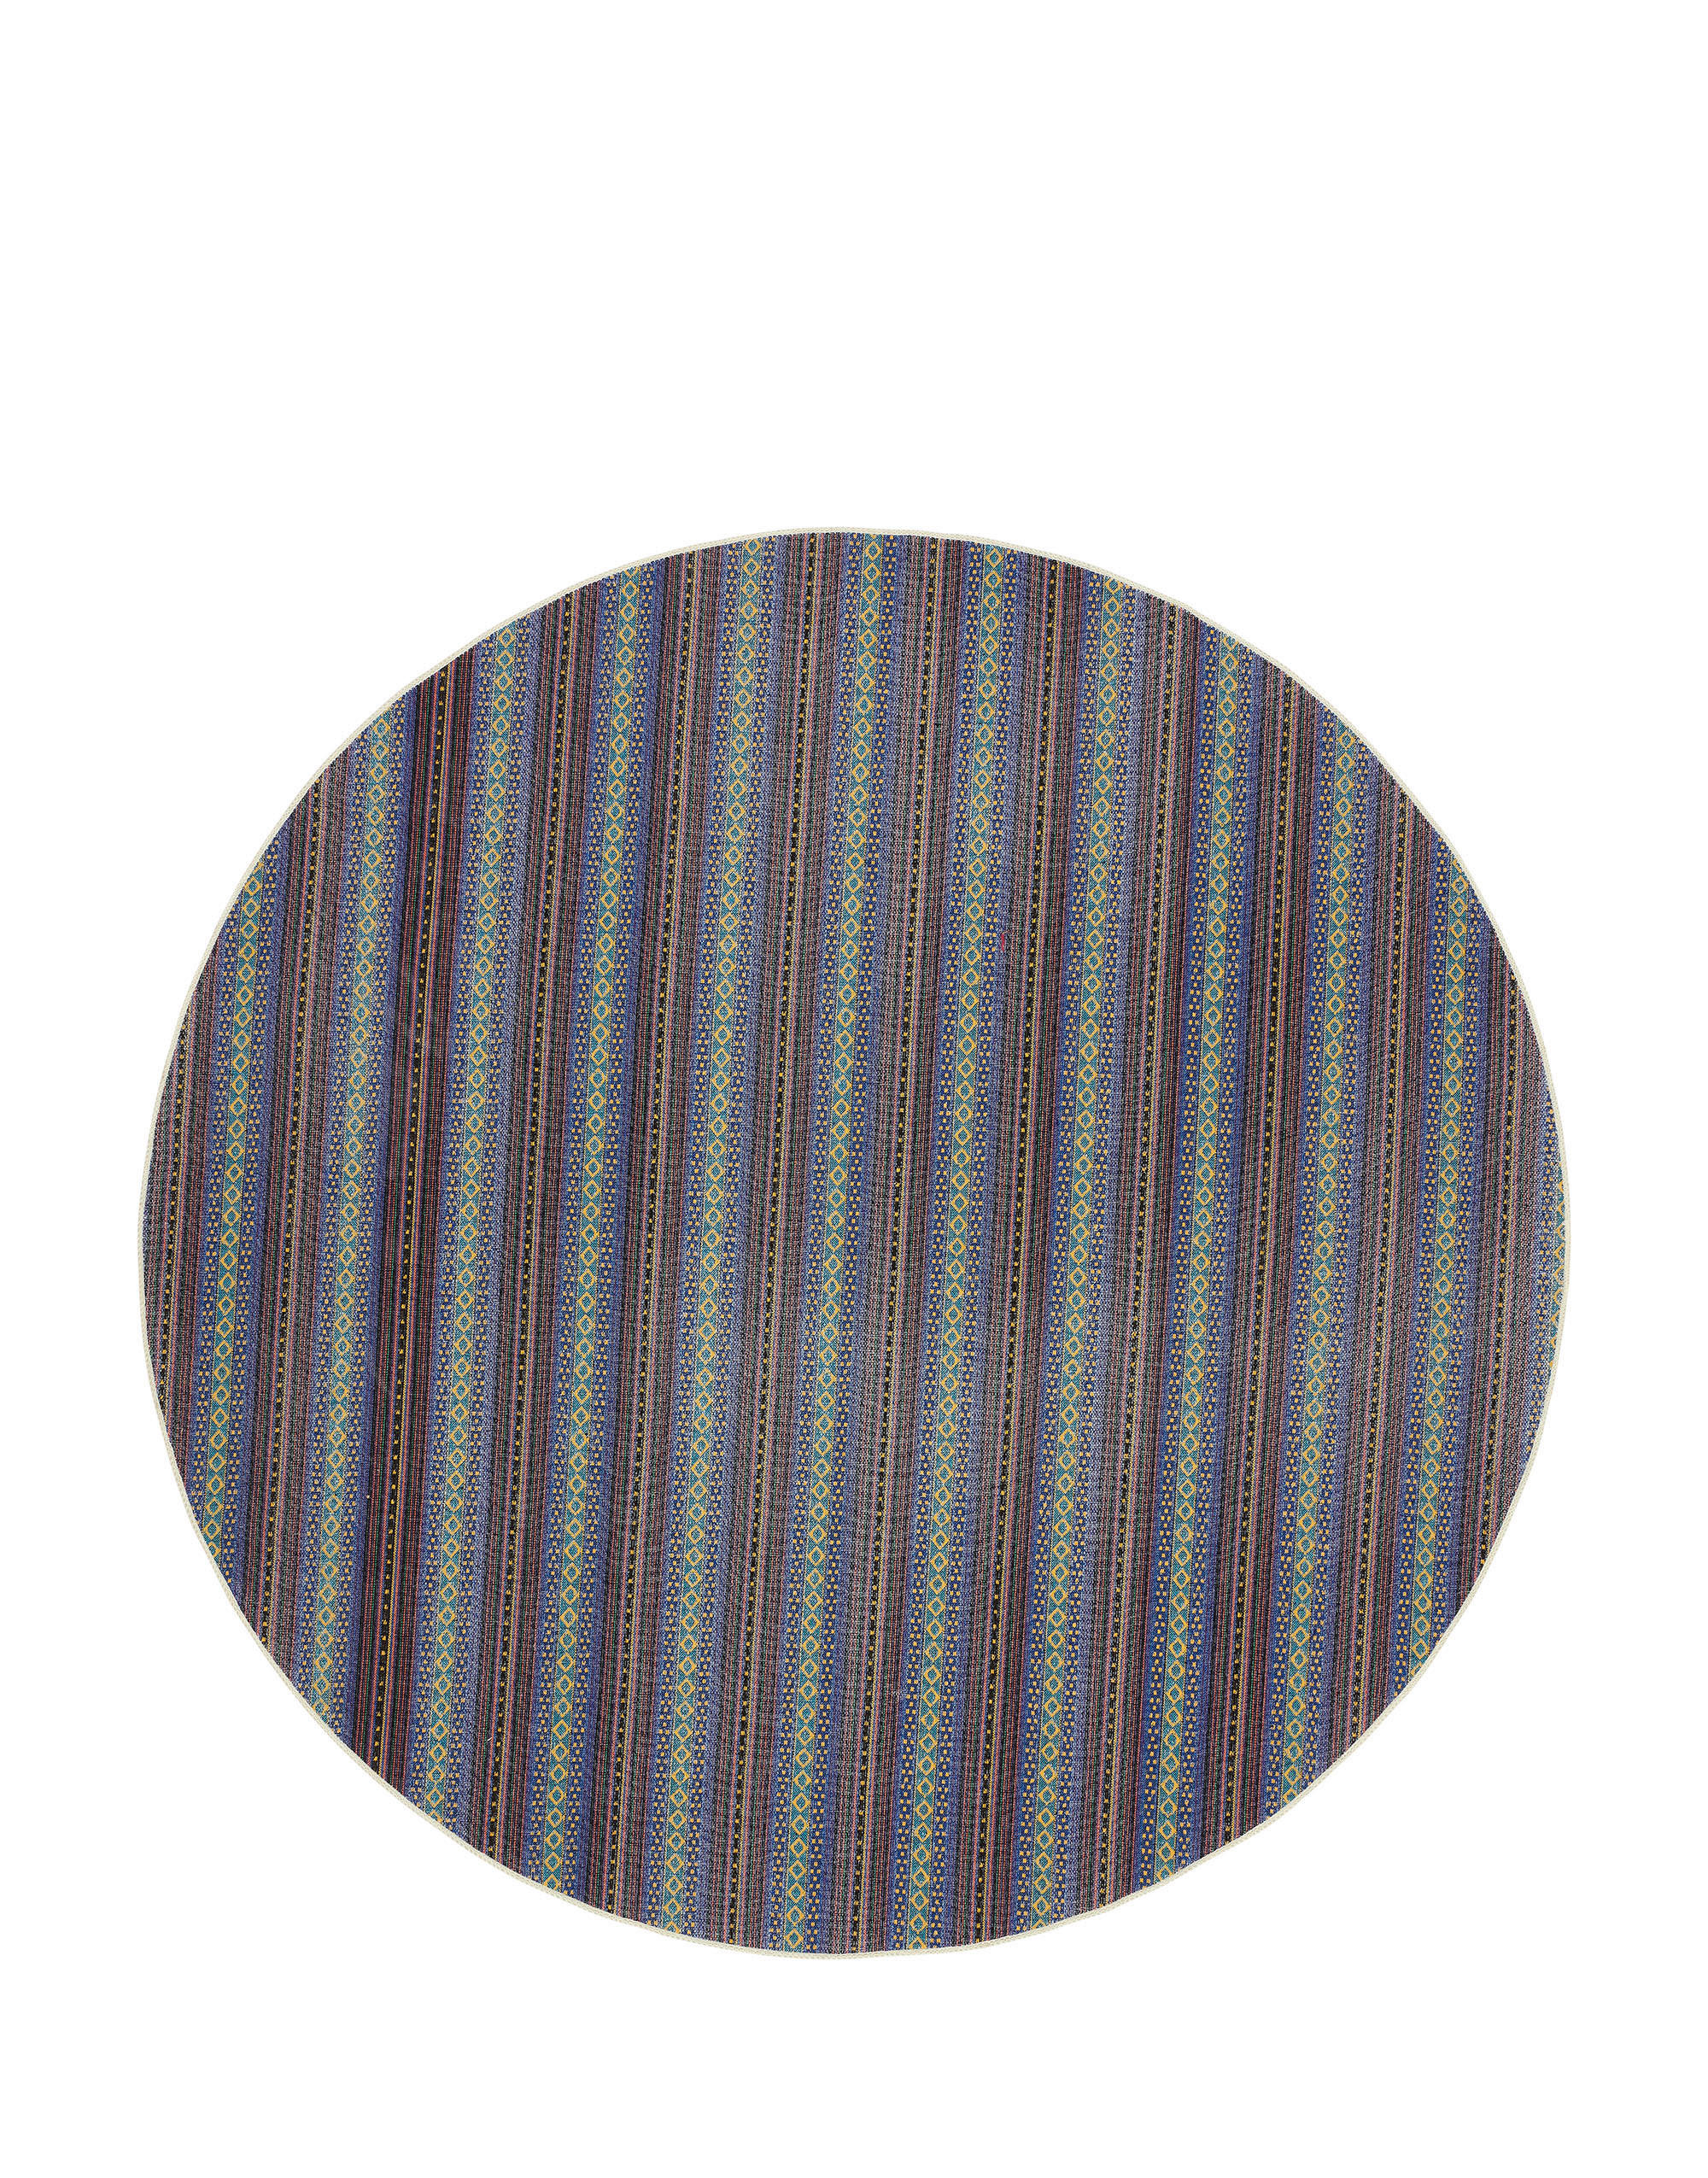 TEPPICH   Blau, Dunkelblau   - Blau/Dunkelblau, Basics, Textil (180cm) - Essenza